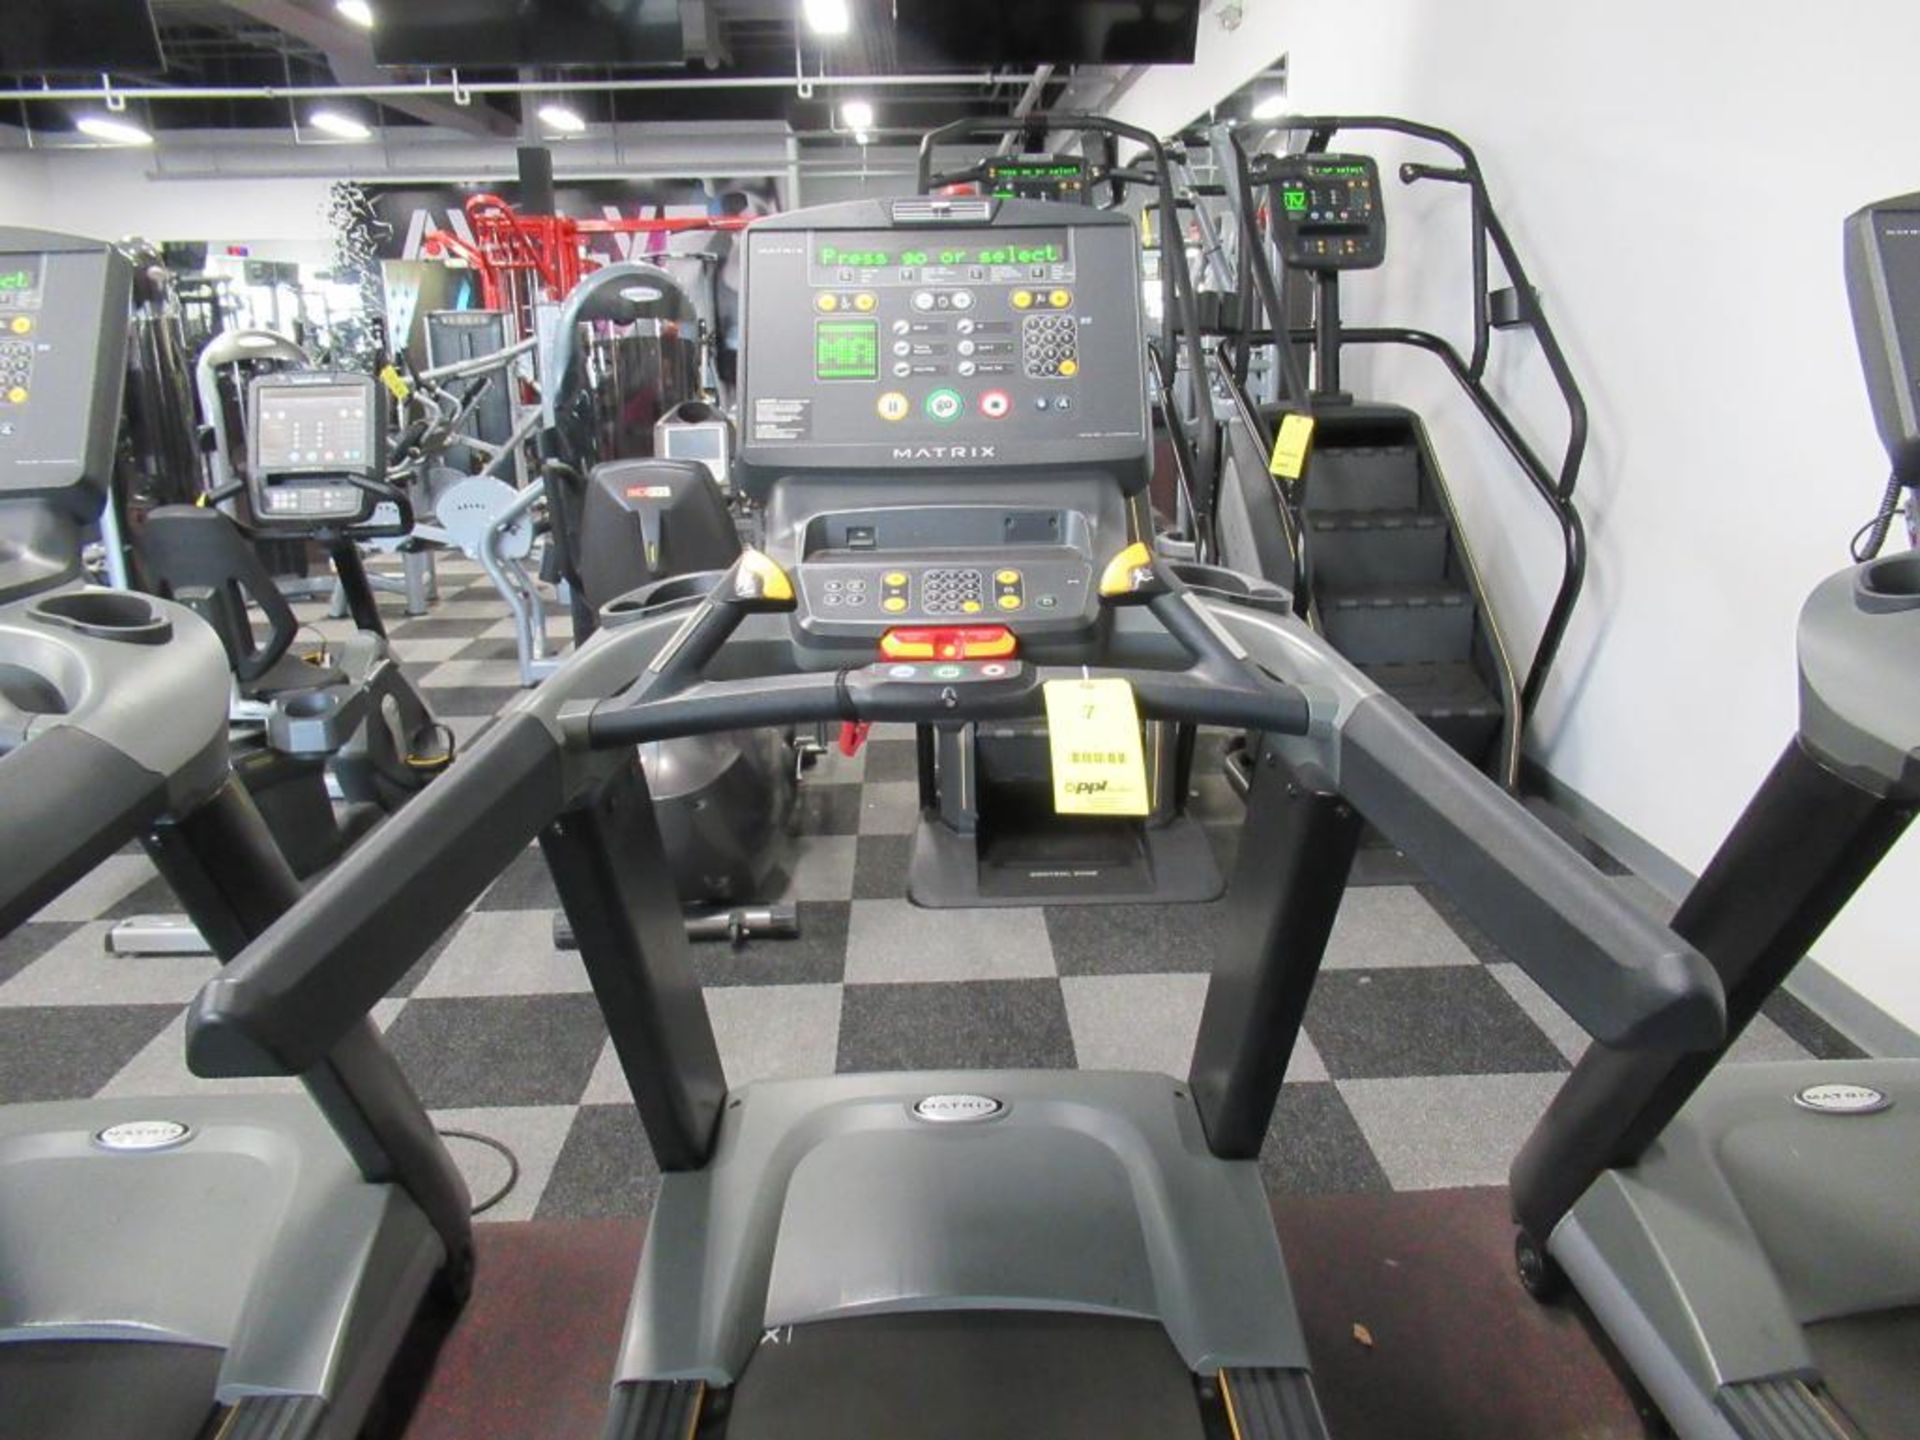 Matrix Ultimate Deck Treadmill, Model T-5XWF-08-C - Image 3 of 4